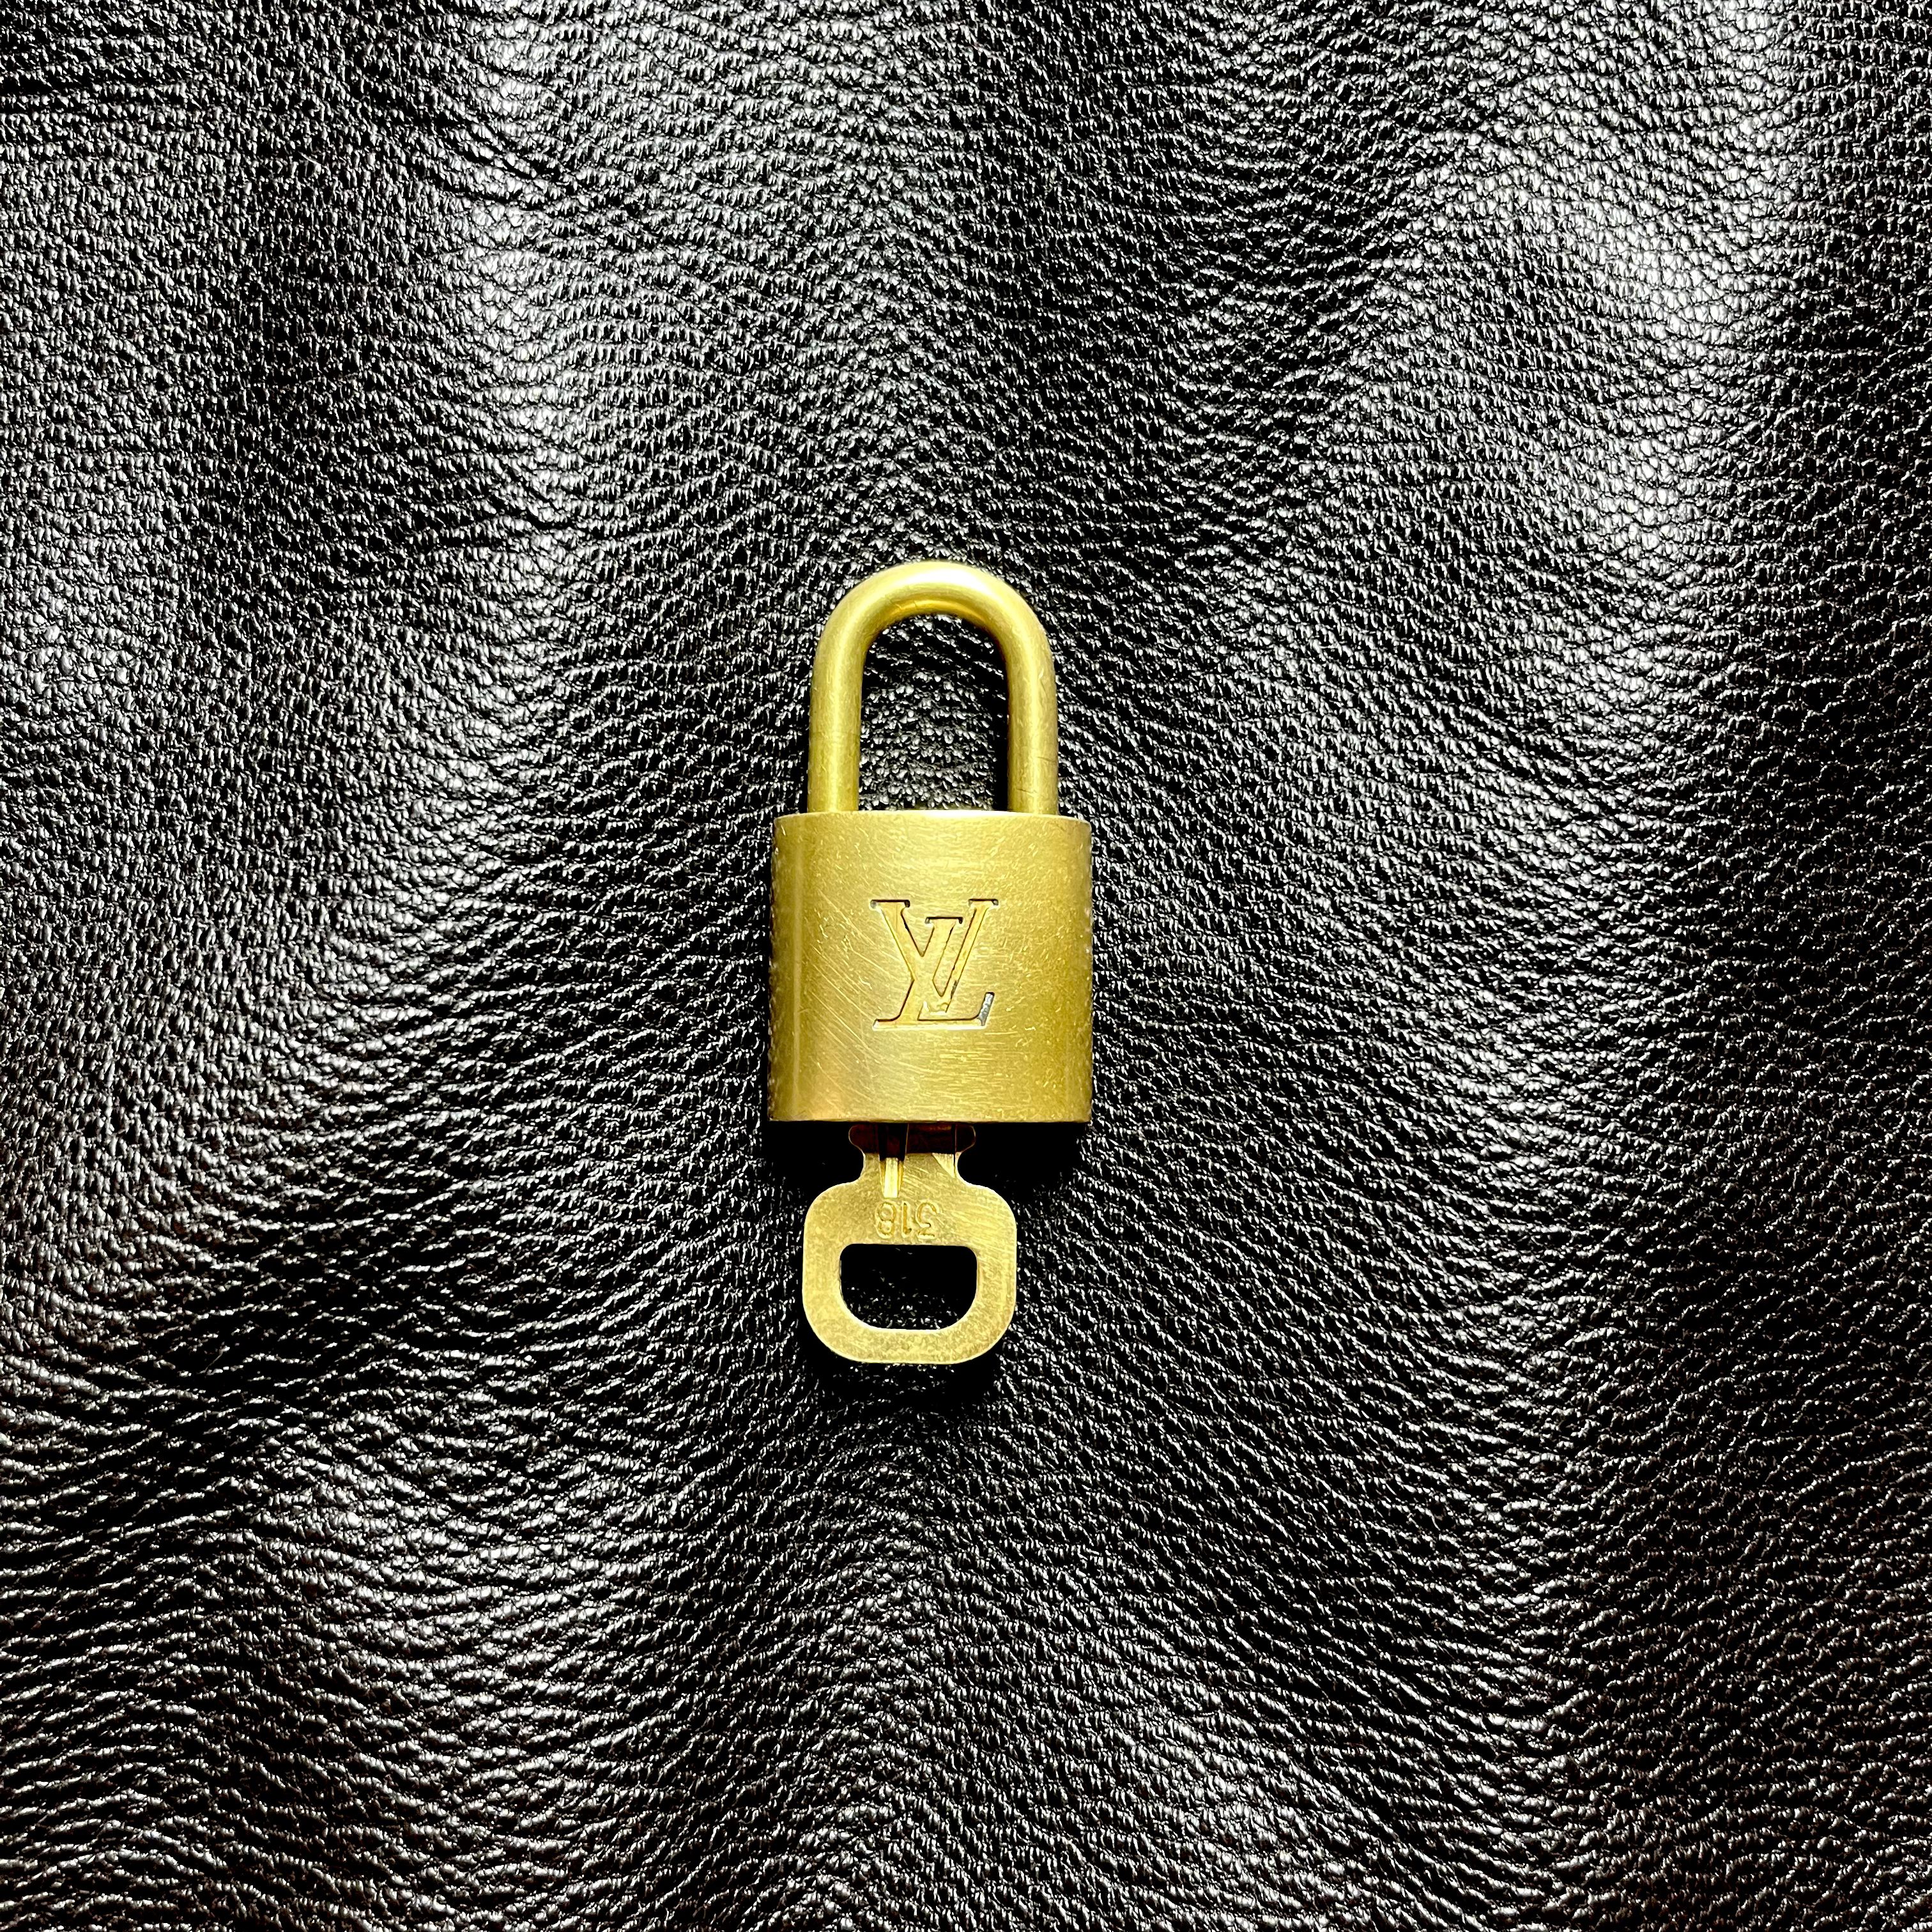 Vintage Louis Vuitton Lock and Key